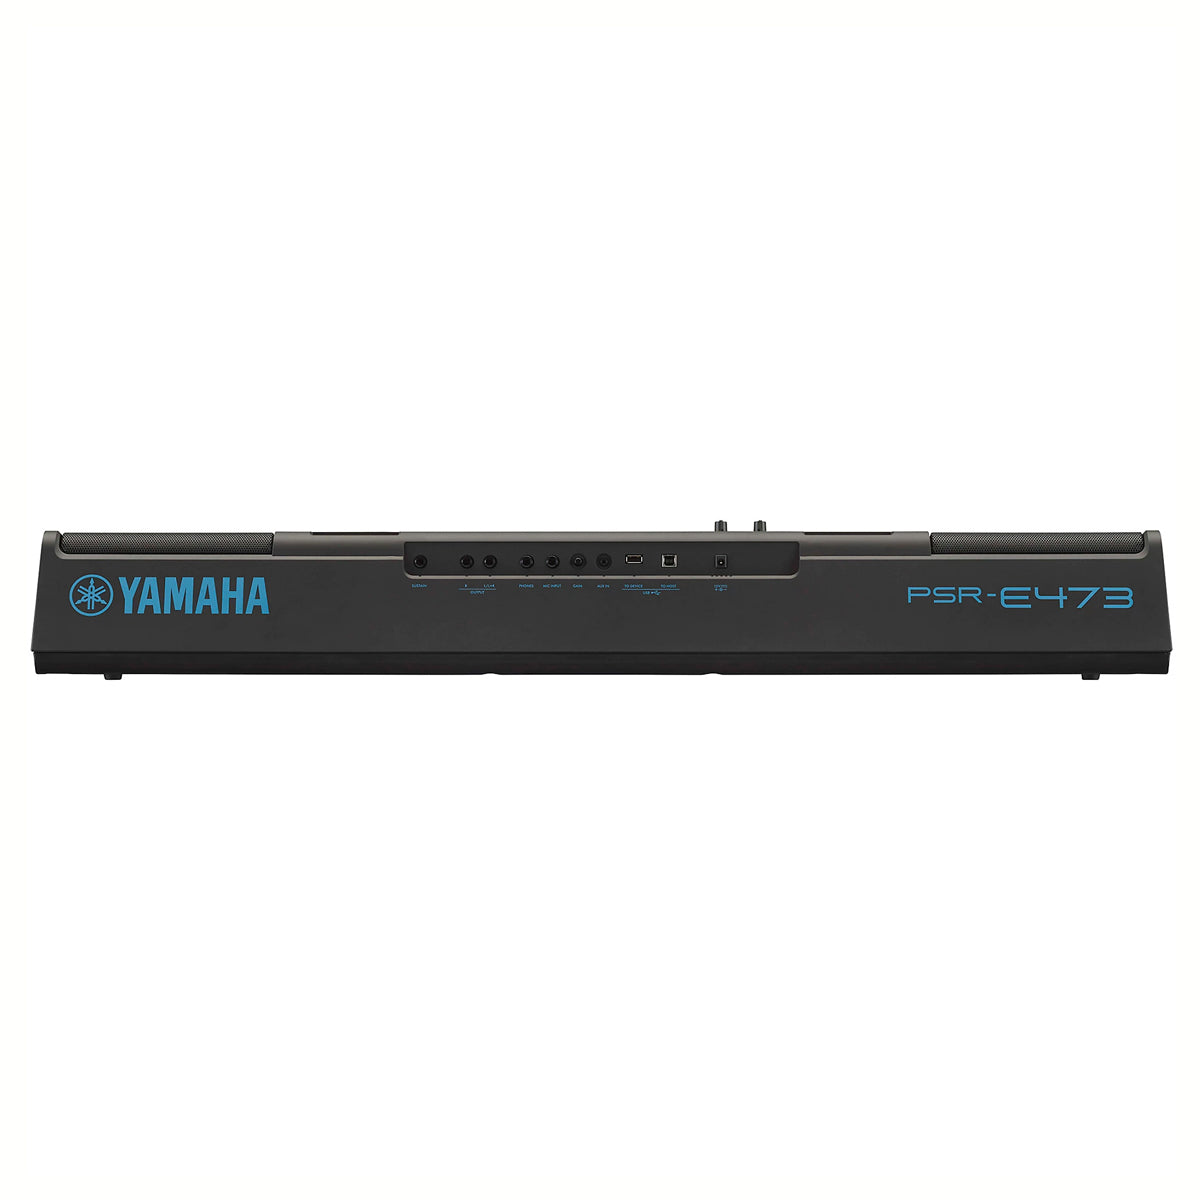 Yamaha PSR-E473 Portable Arranger Keyboard